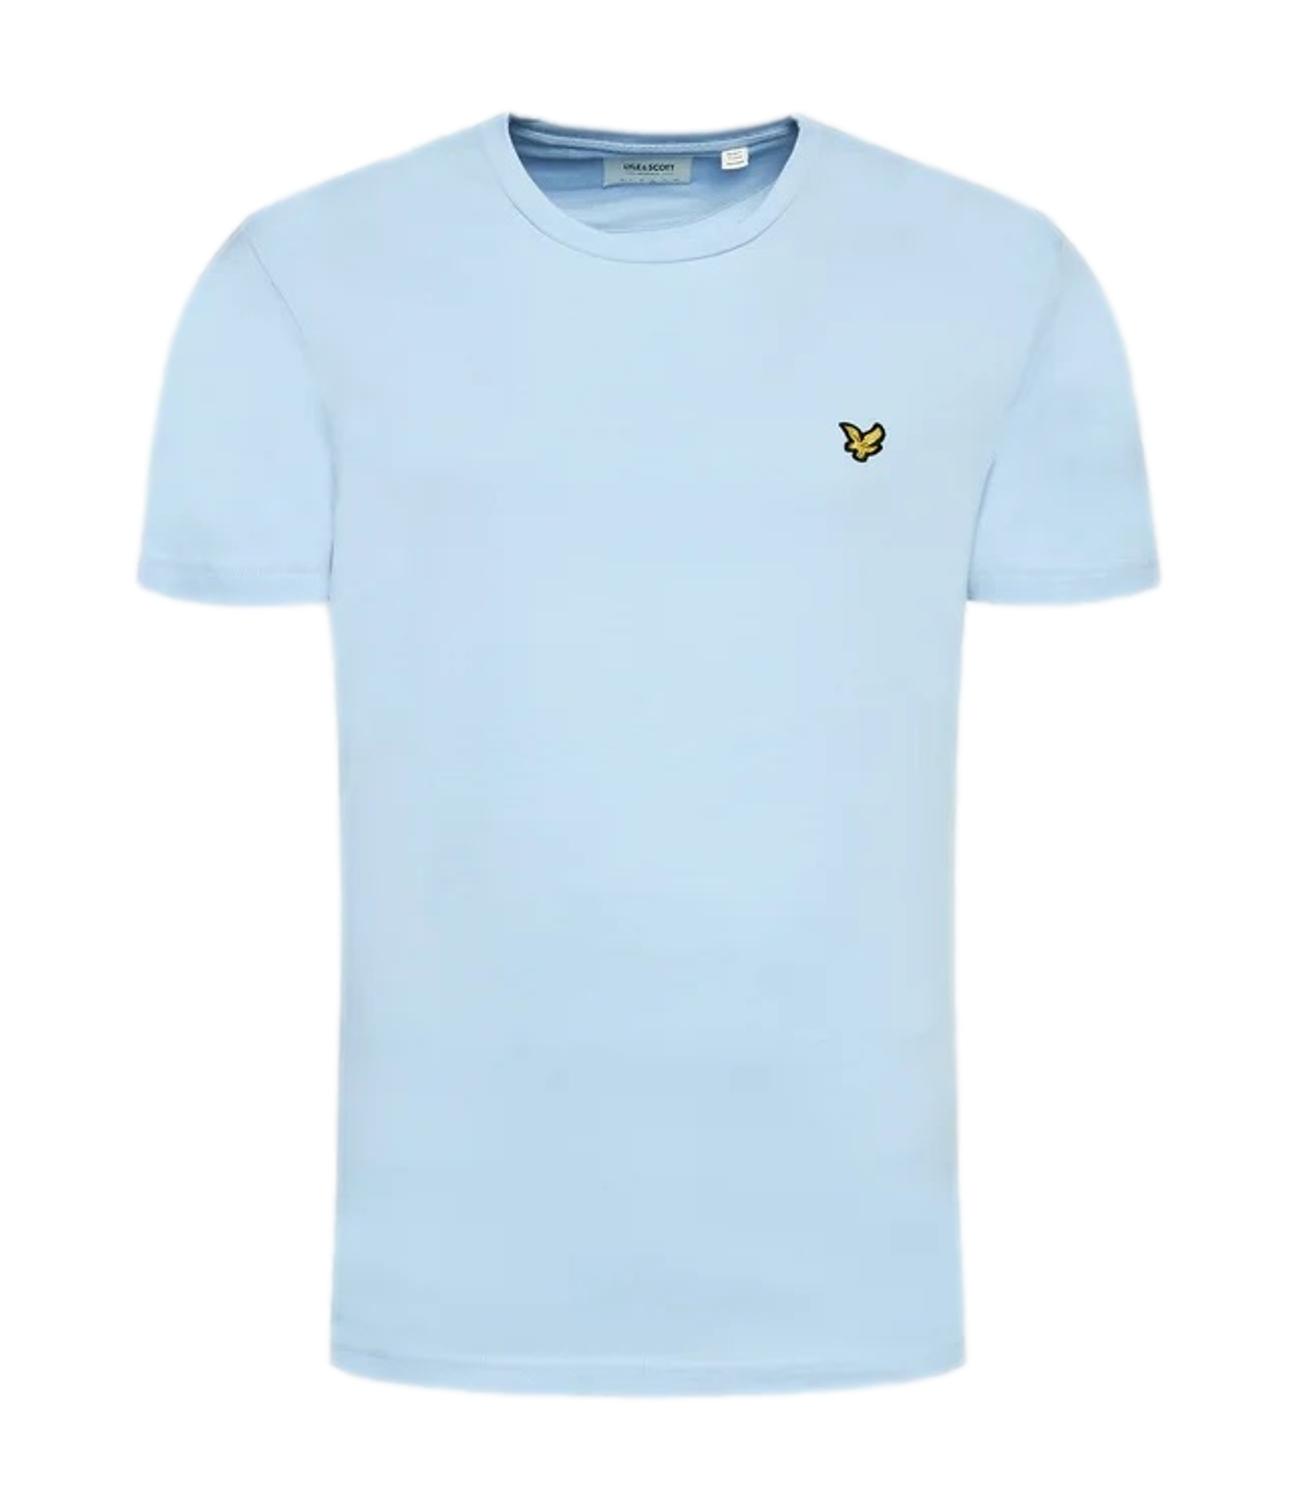 T-shirt Plain Lyle & Scott light blue